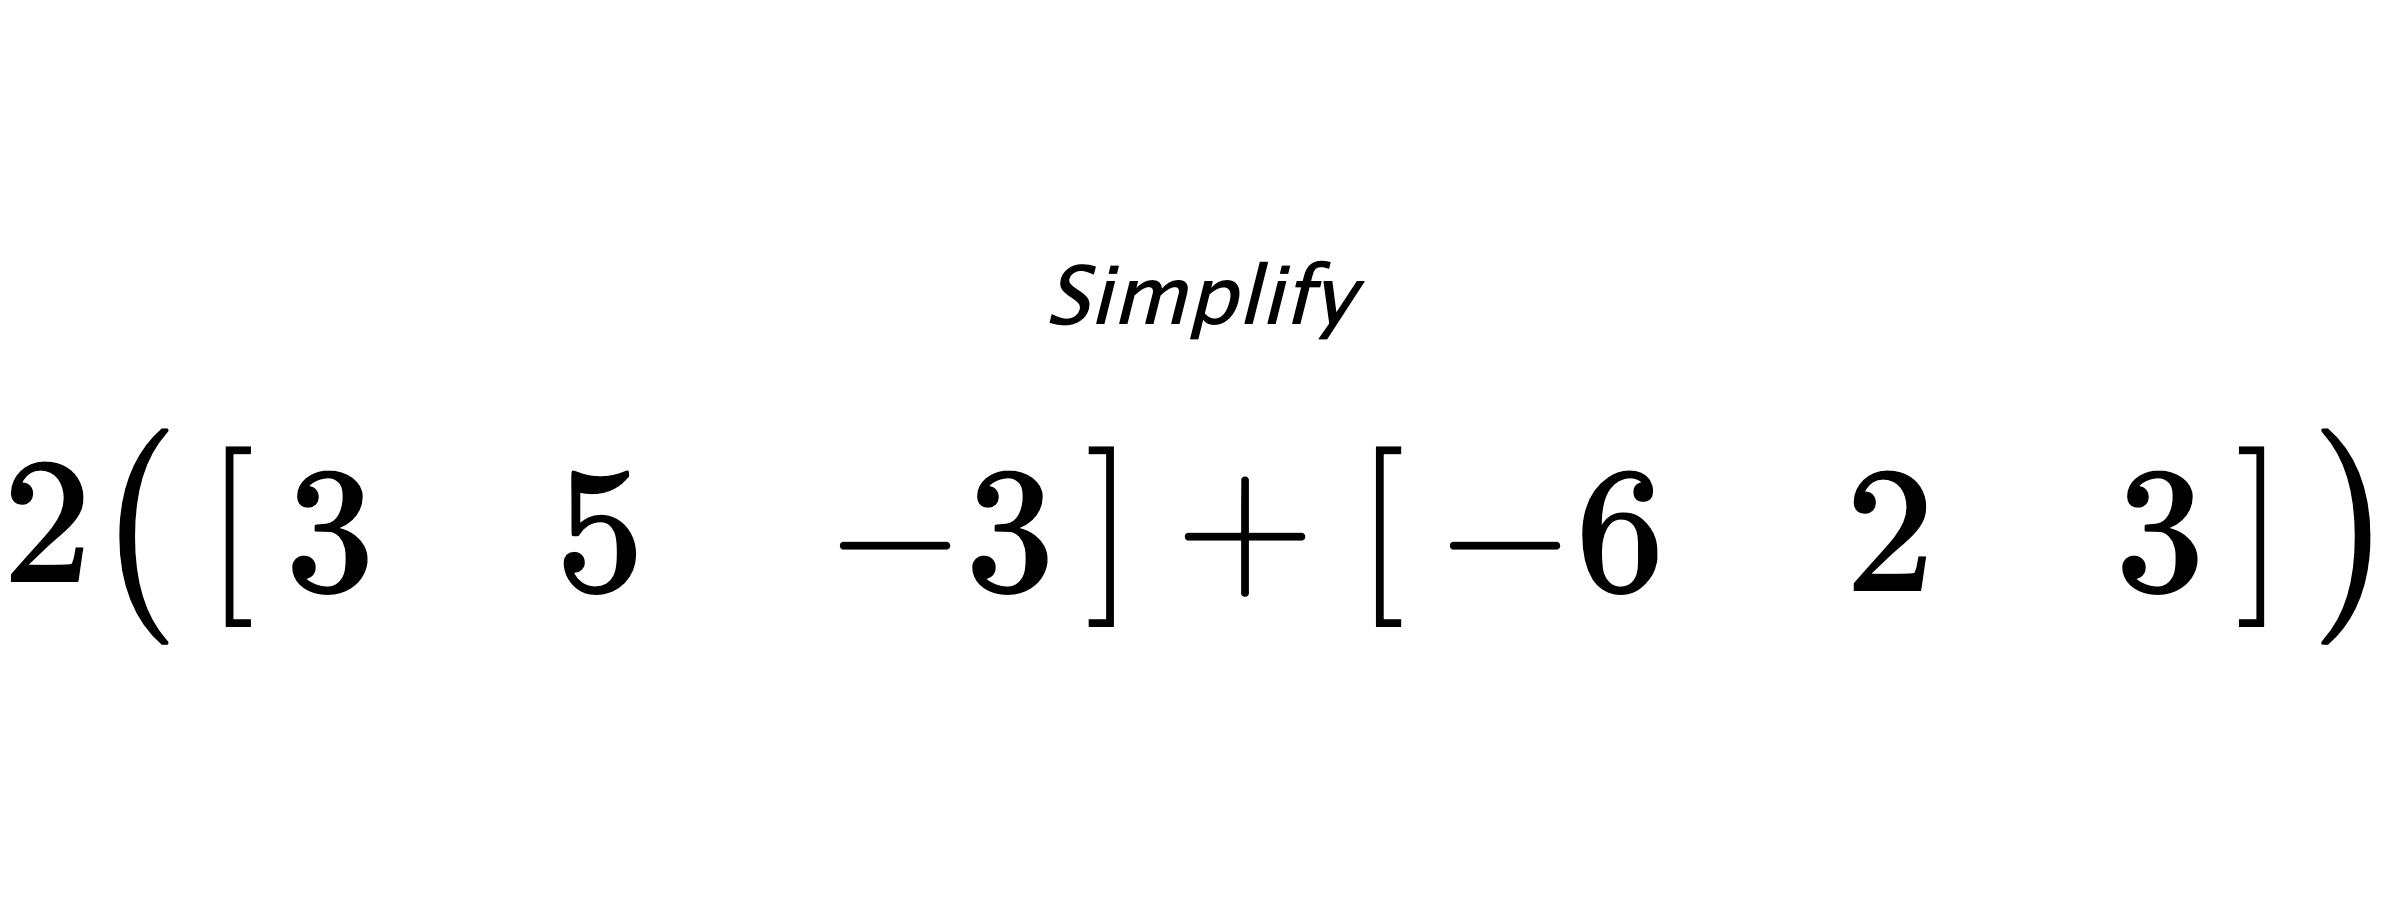 Simplify $ 2 \big( \begin{bmatrix} 3 & 5 & -3 \end{bmatrix} + \begin{bmatrix} -6 & 2 & 3 \end{bmatrix} \big) $